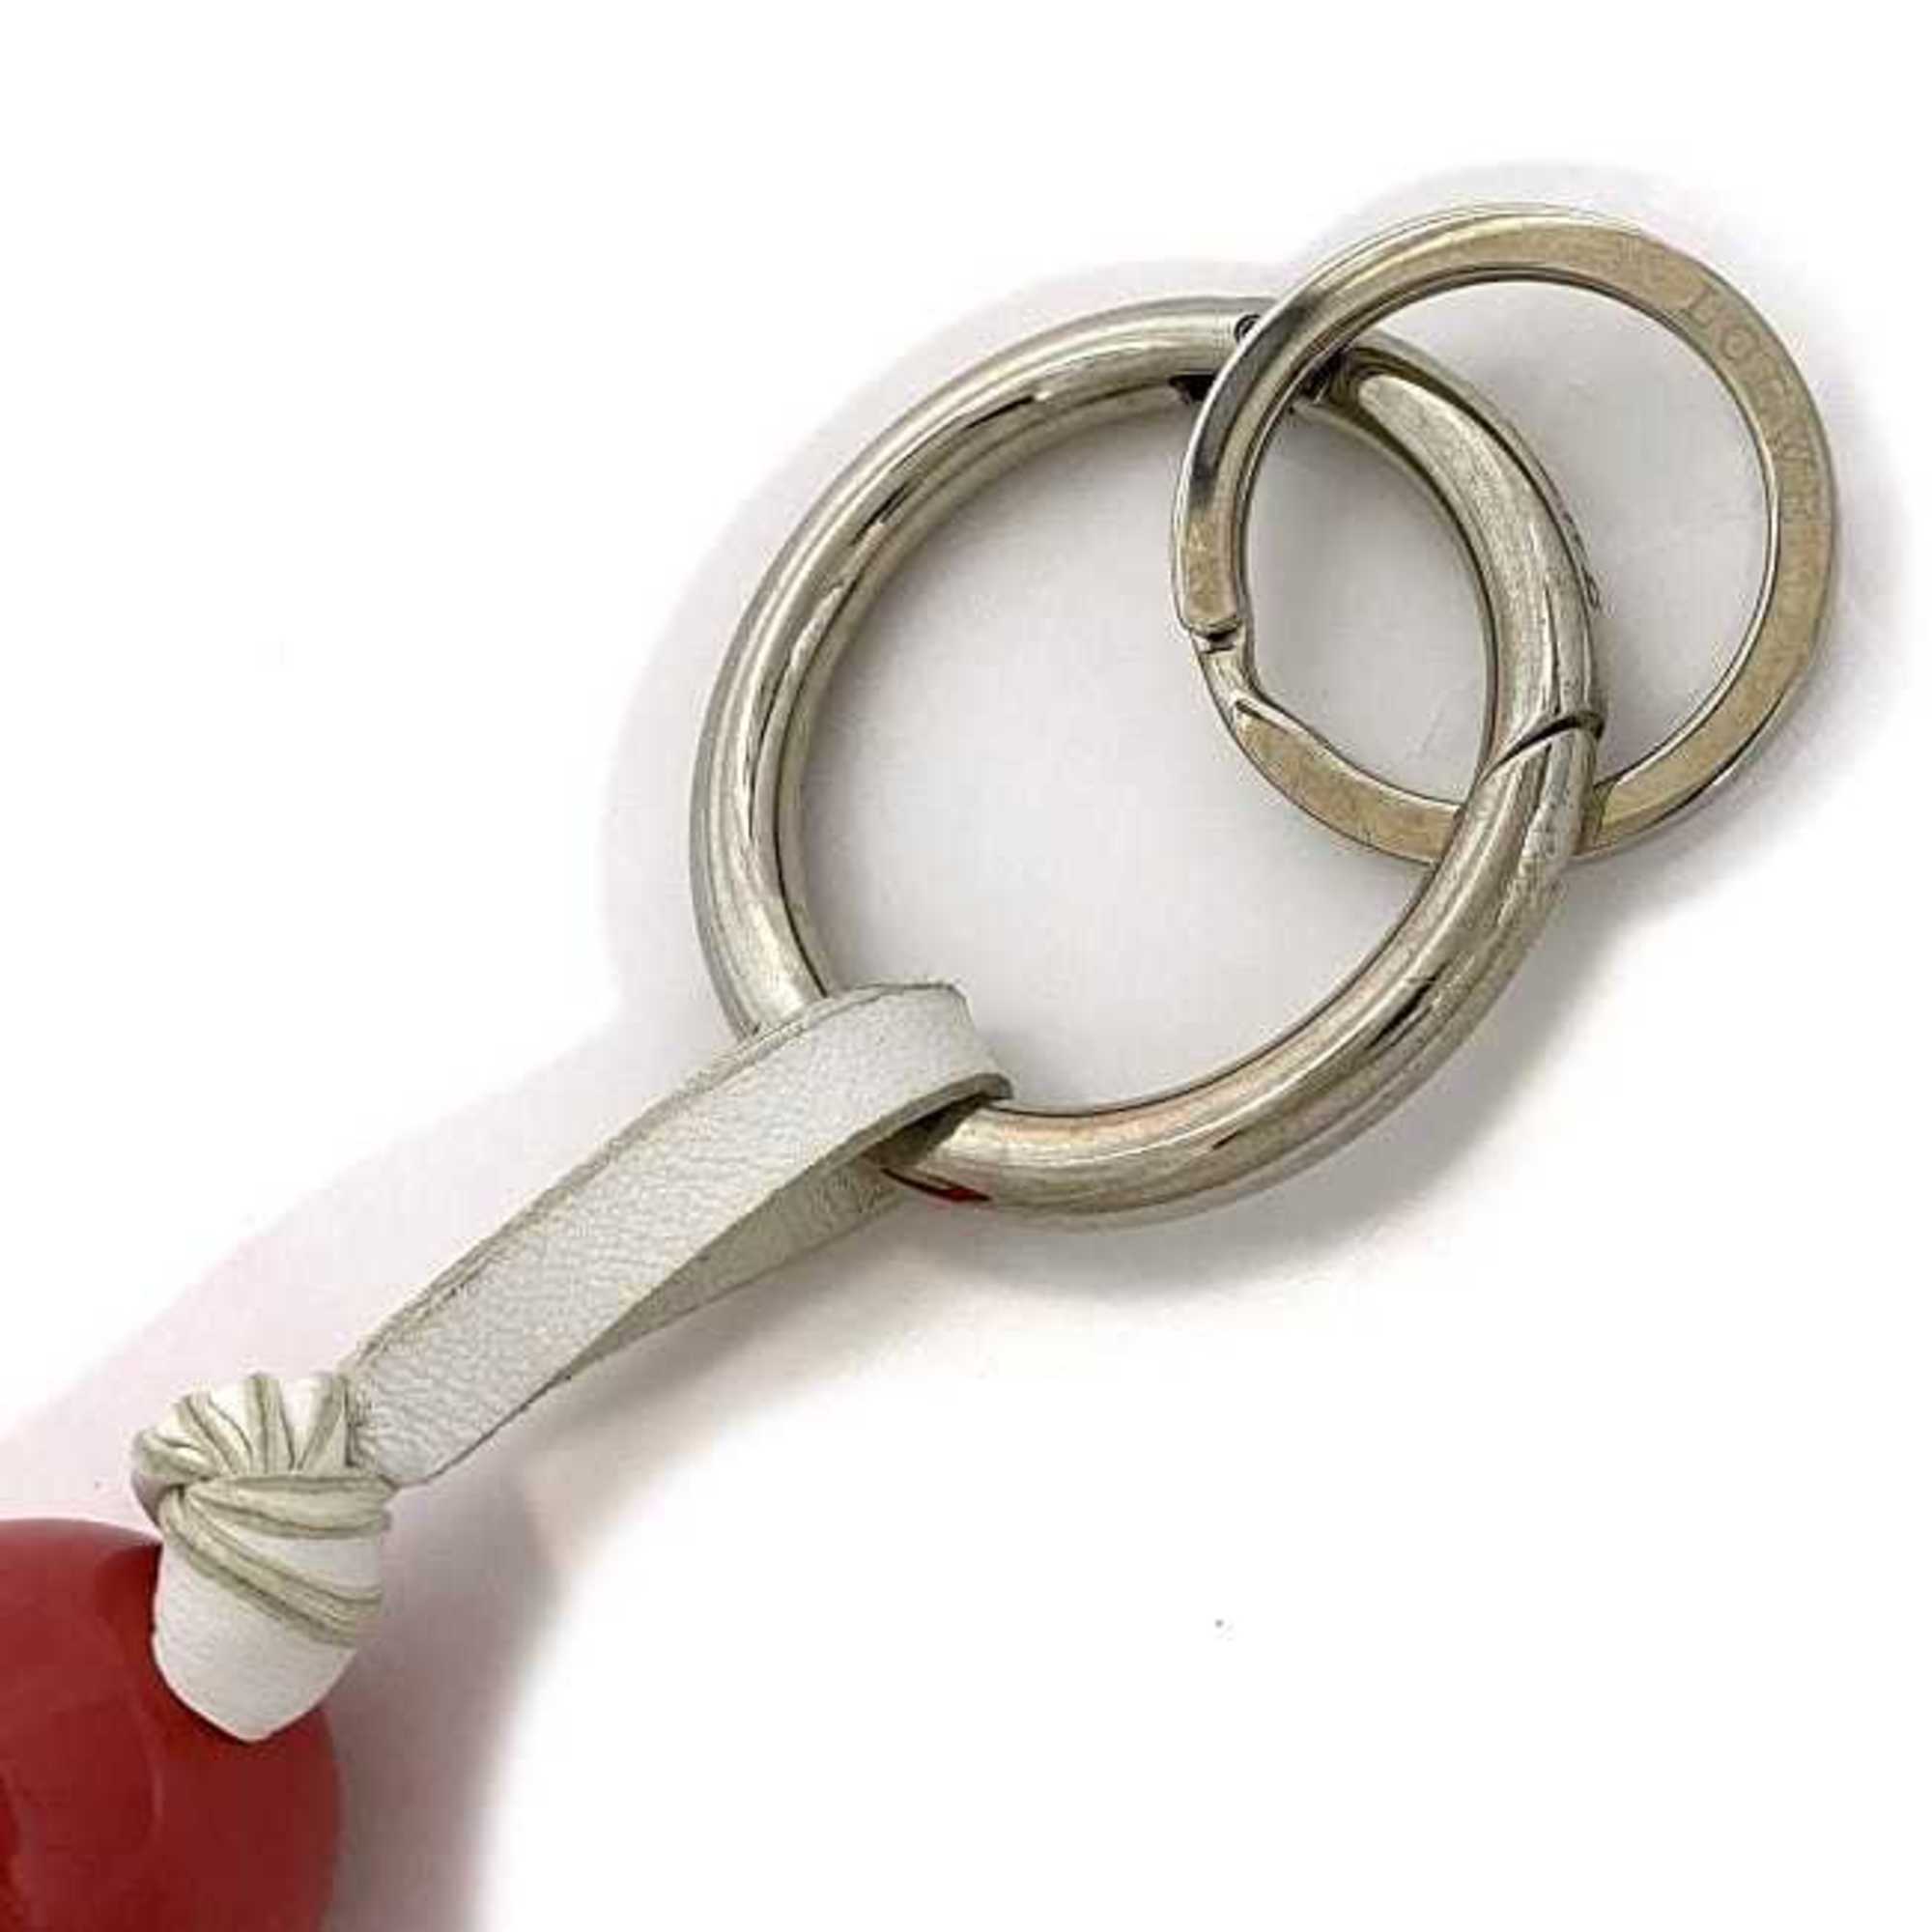 Loewe bag charm white red blue silver leather metal plastic LOEWE tassel key ring holder accent